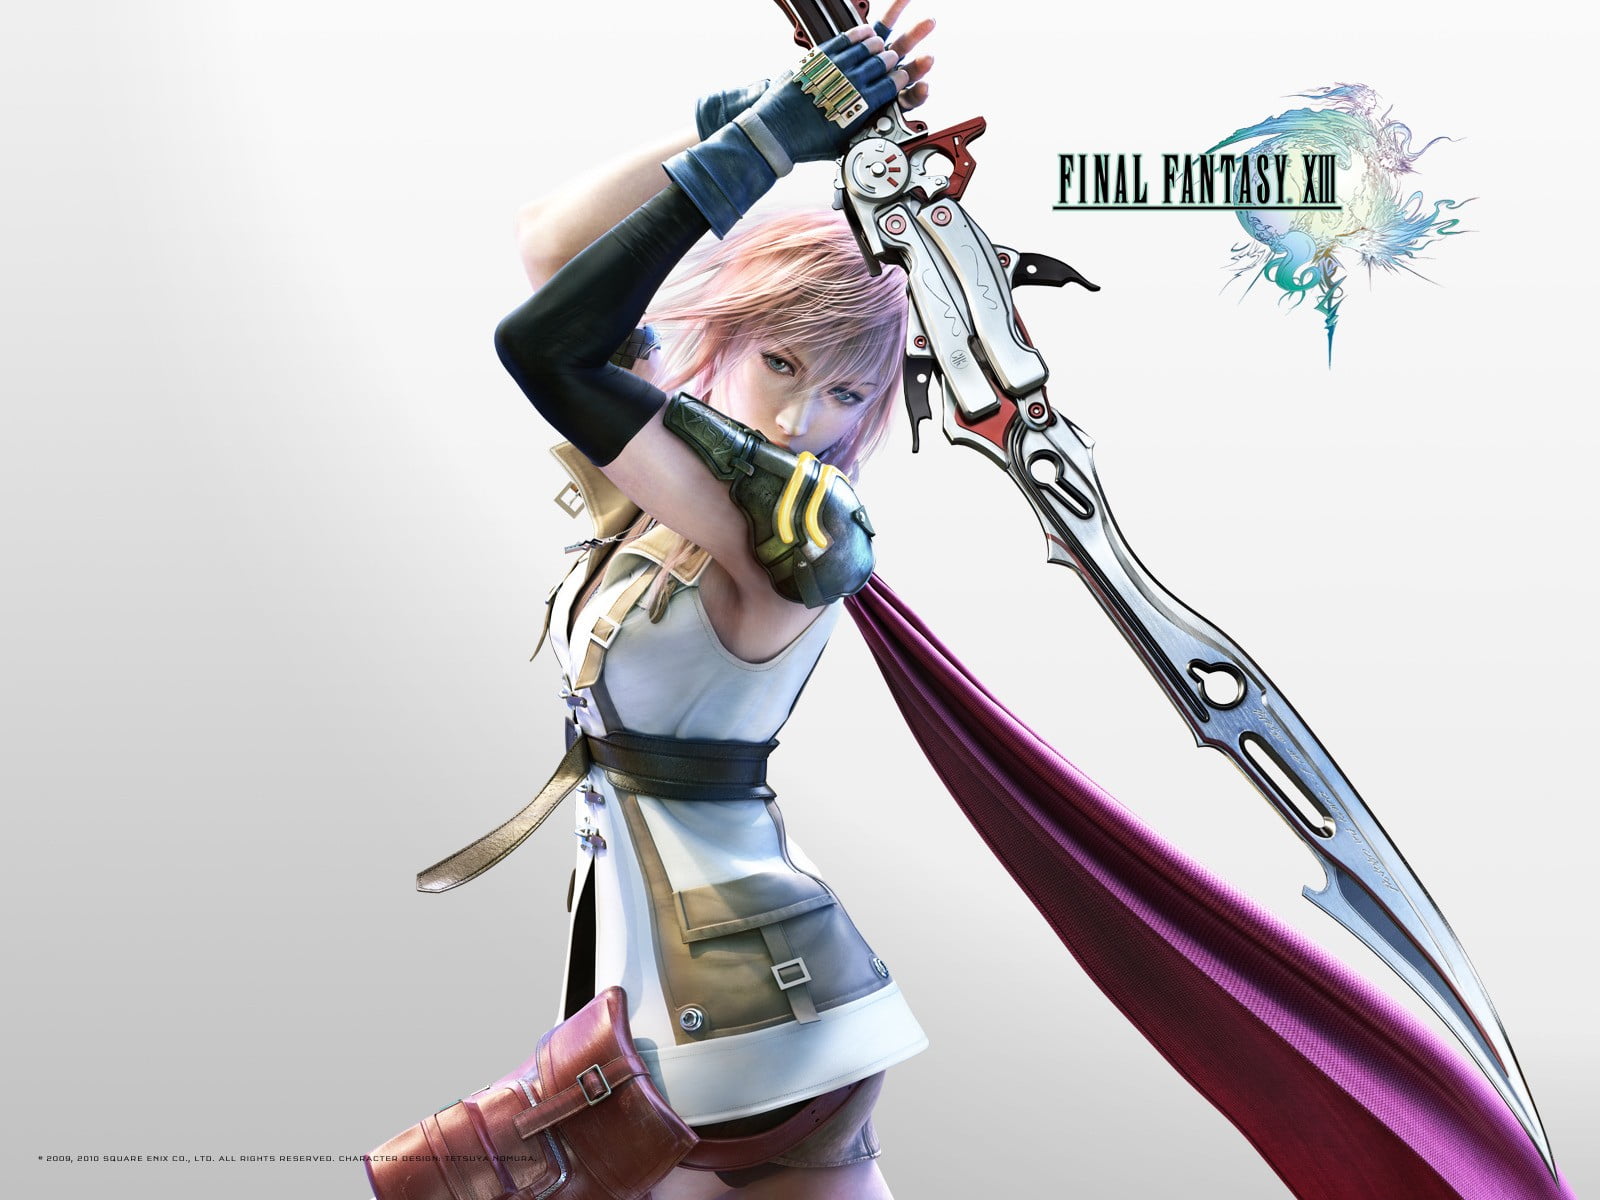 Final Fantasy character digital wallpaper, Final Fantasy XIII, Claire Farron, video games, sword